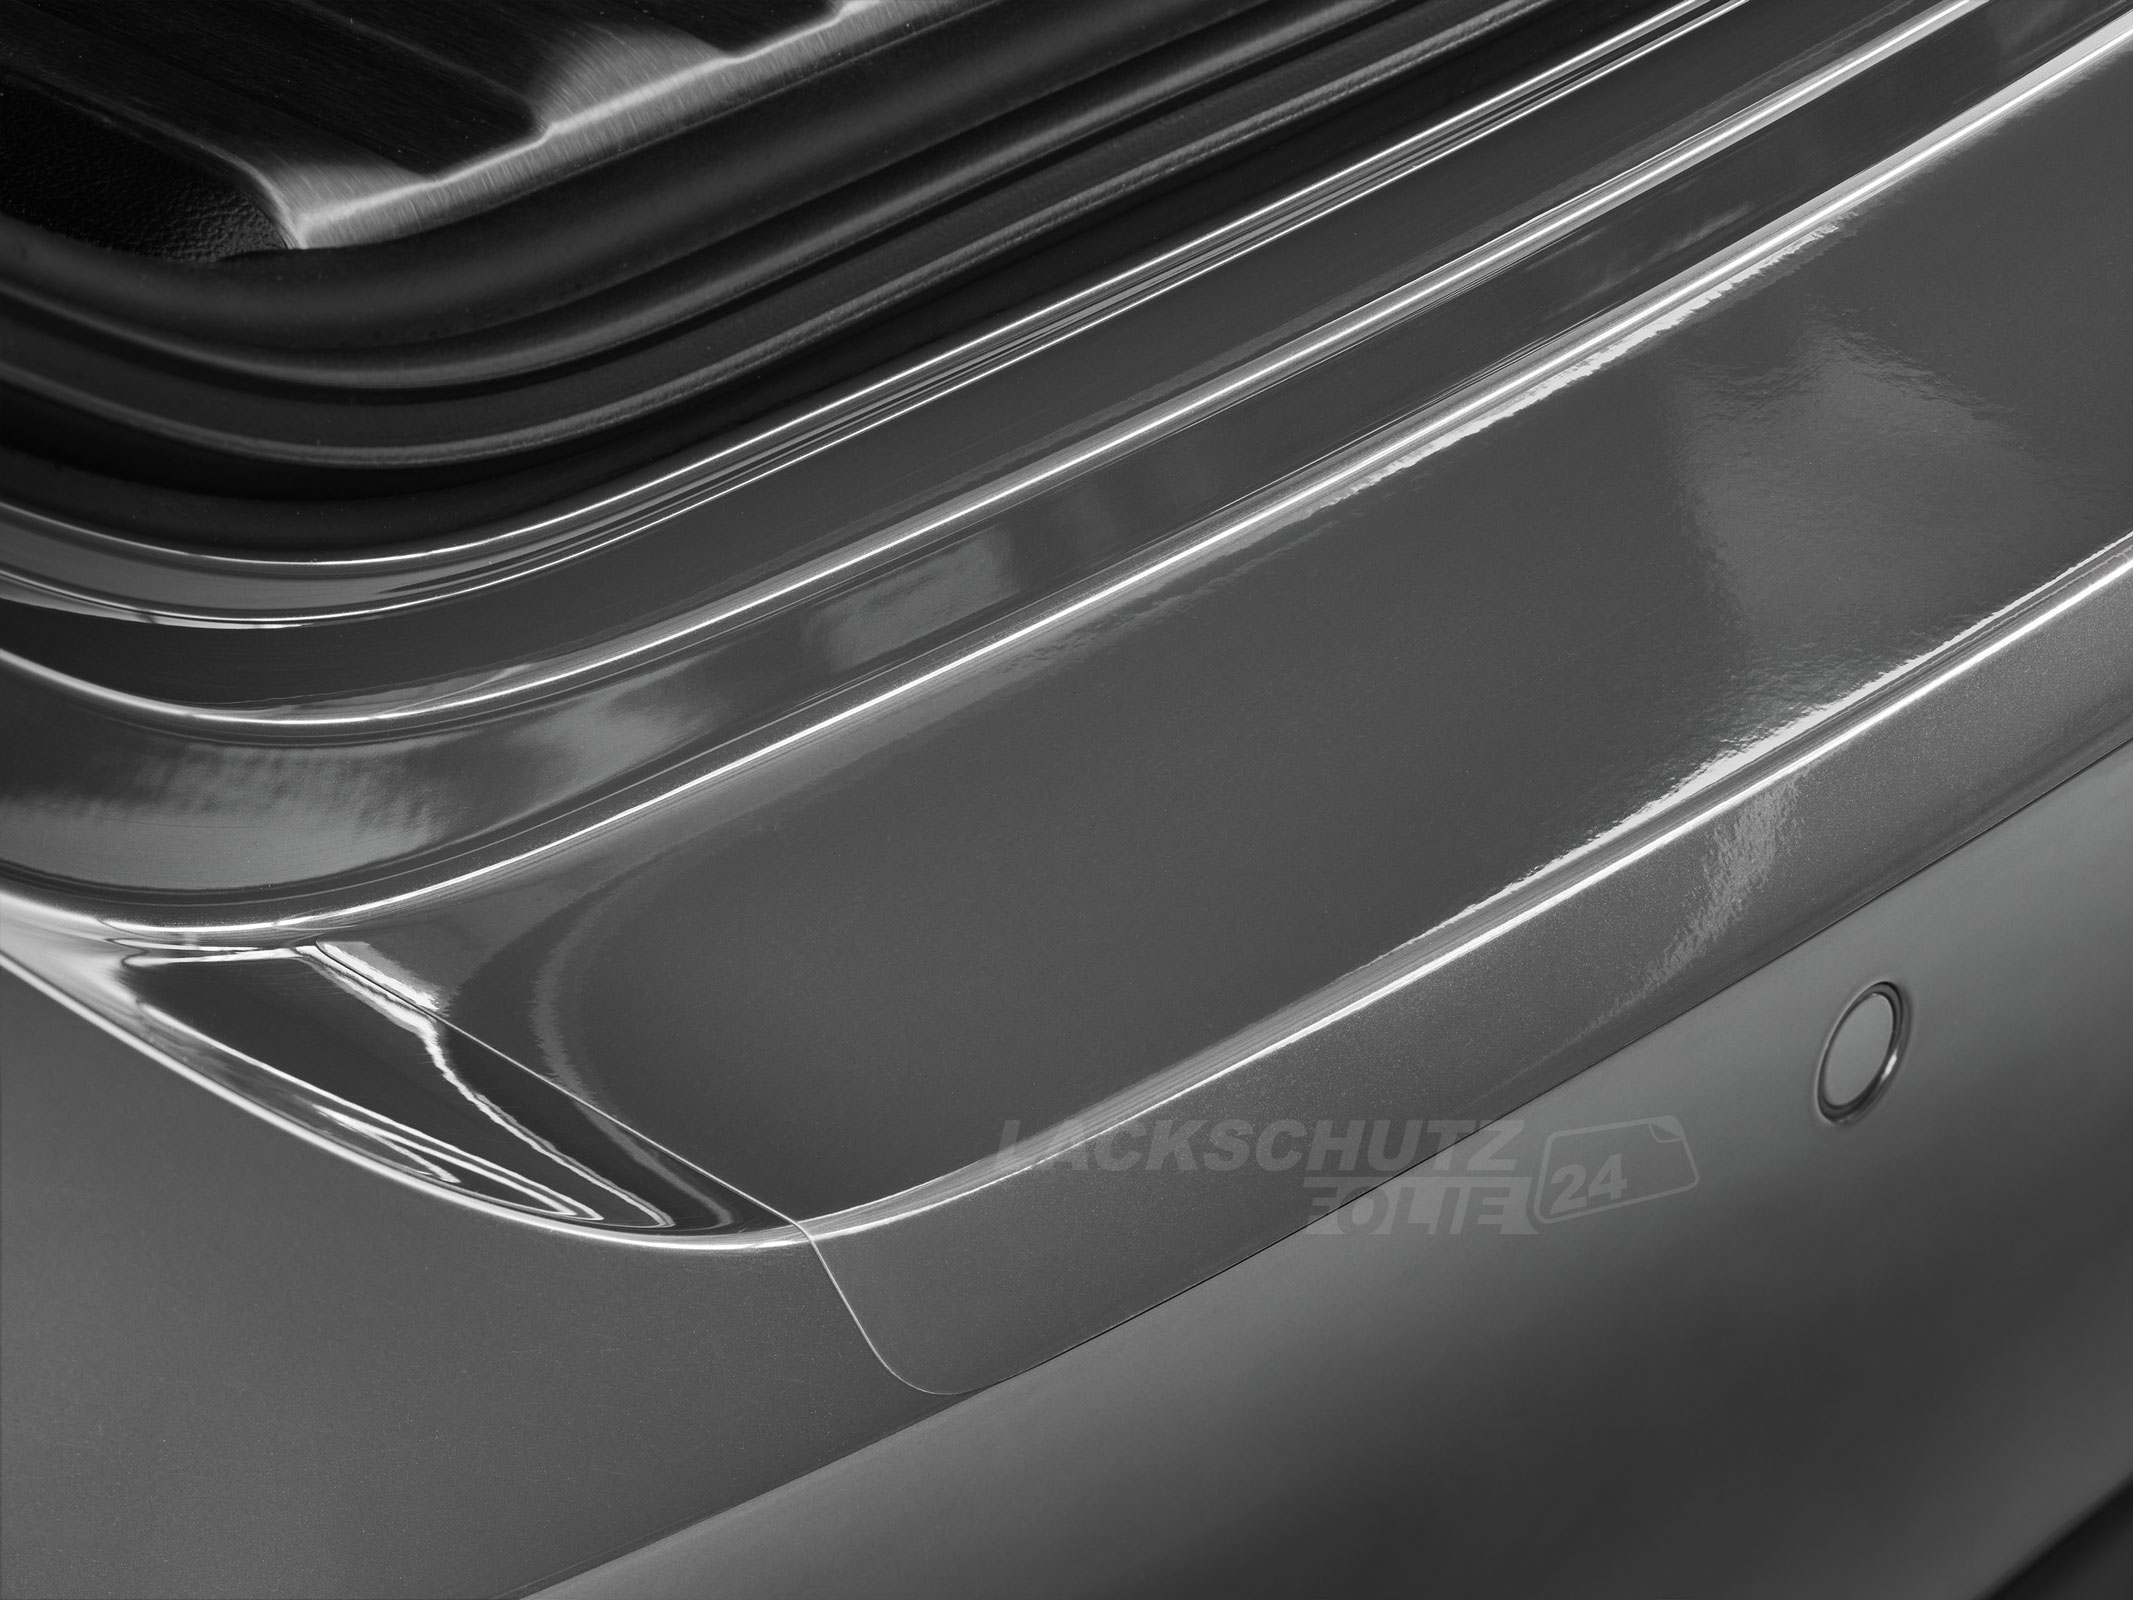 Ladekantenschutzfolie - Transparent Glatt Hochglänzend 150 µm stark für Audi A4 Limousine B8, Typ 8K, BJ 03/2008-2015